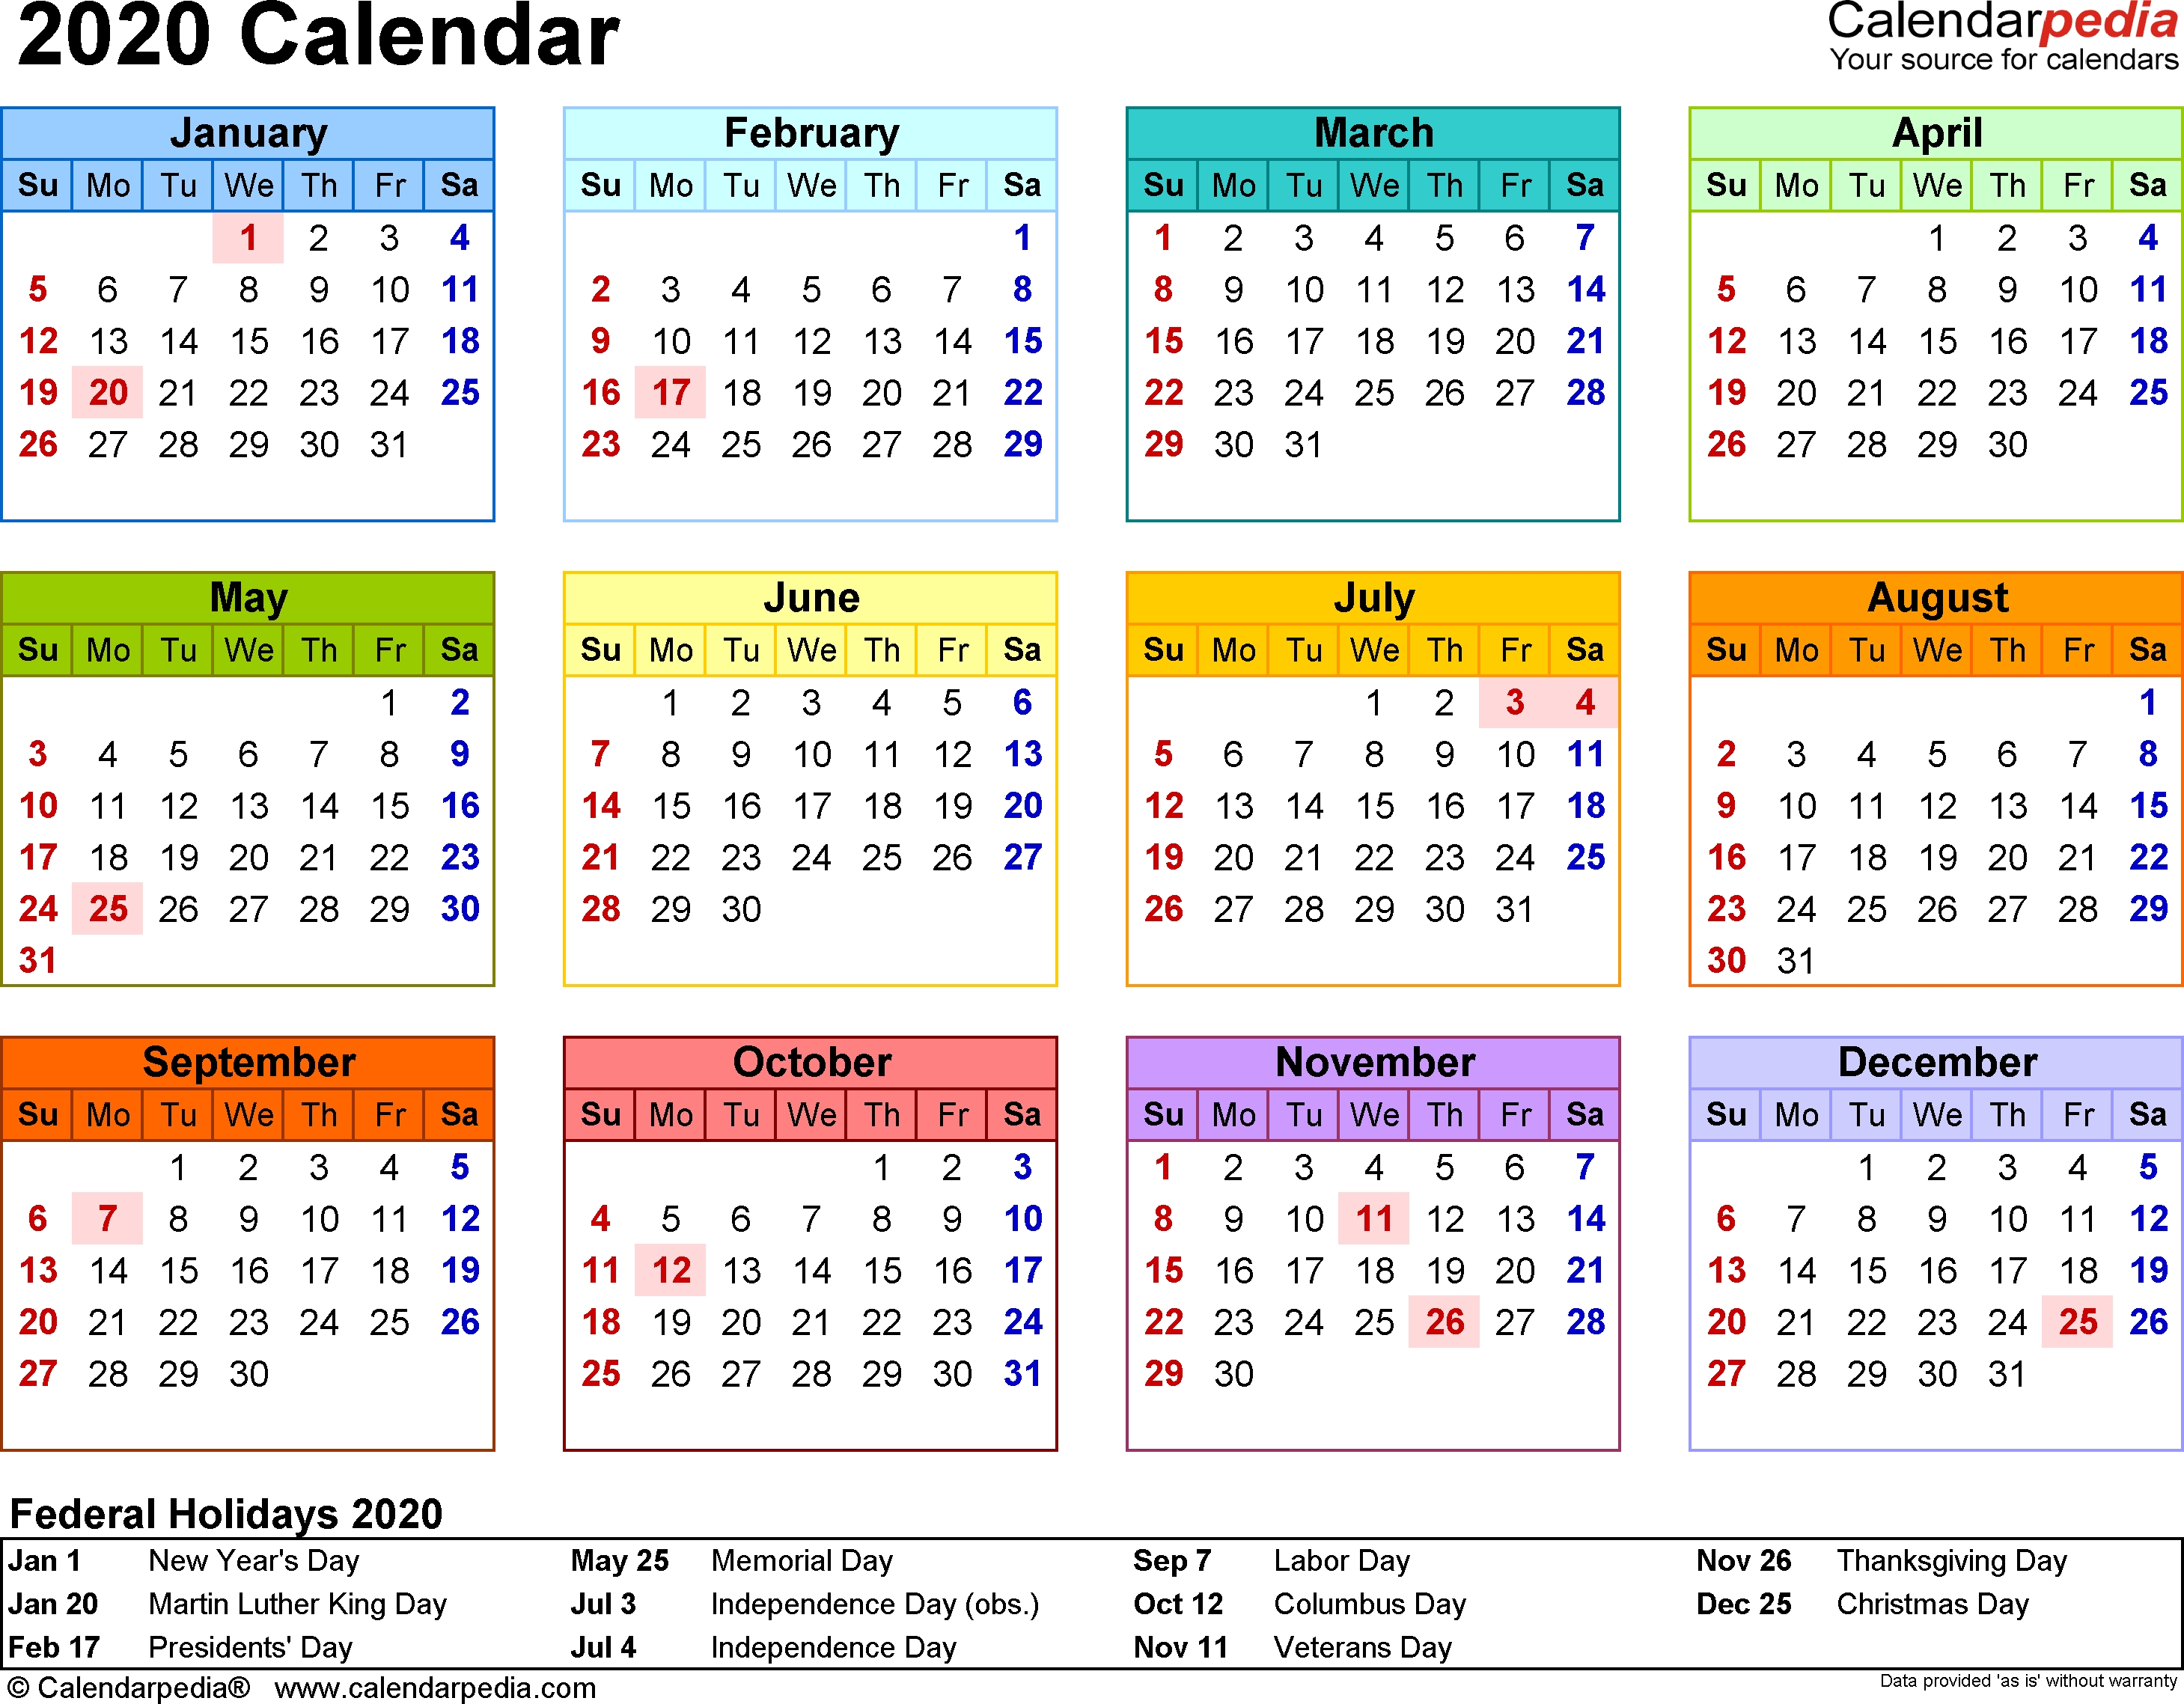 2020 Calendar - Download 17 Free Printable Excel Templates (.xlsx) regarding 2020 Calendar Printable Singapore